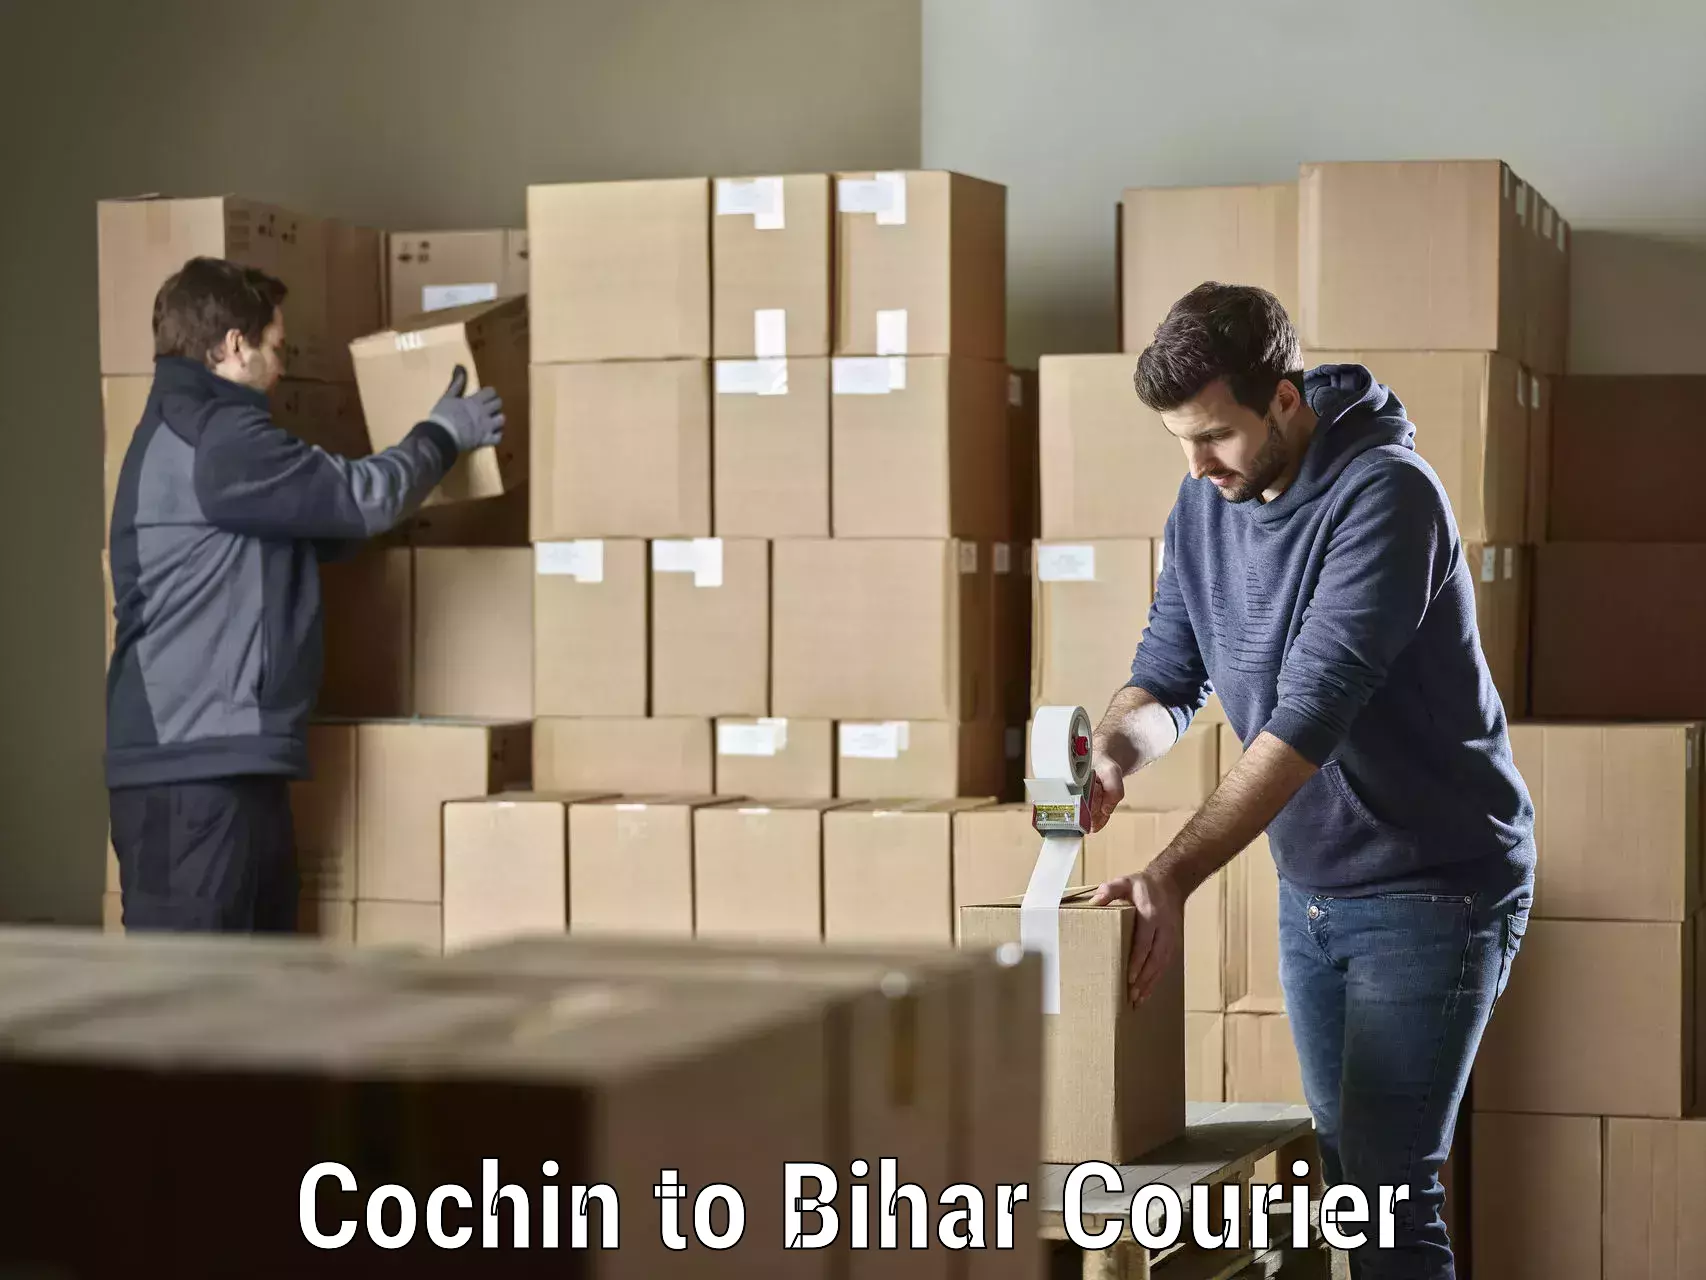 Global logistics network Cochin to Bihar